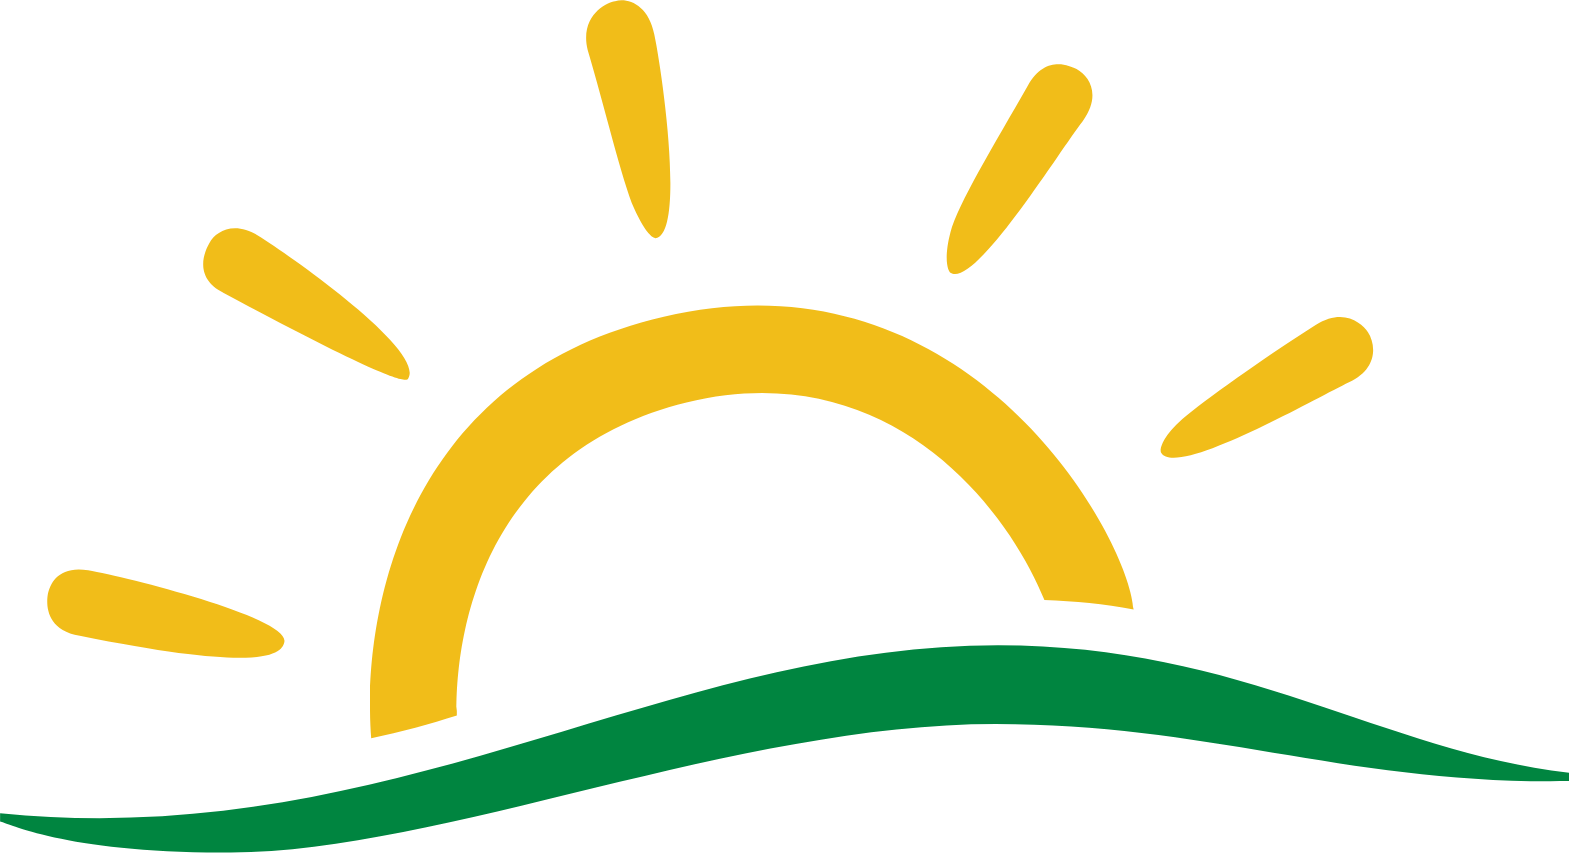 Bright Logo PNG Transparent & SVG Vector - Freebie Supply